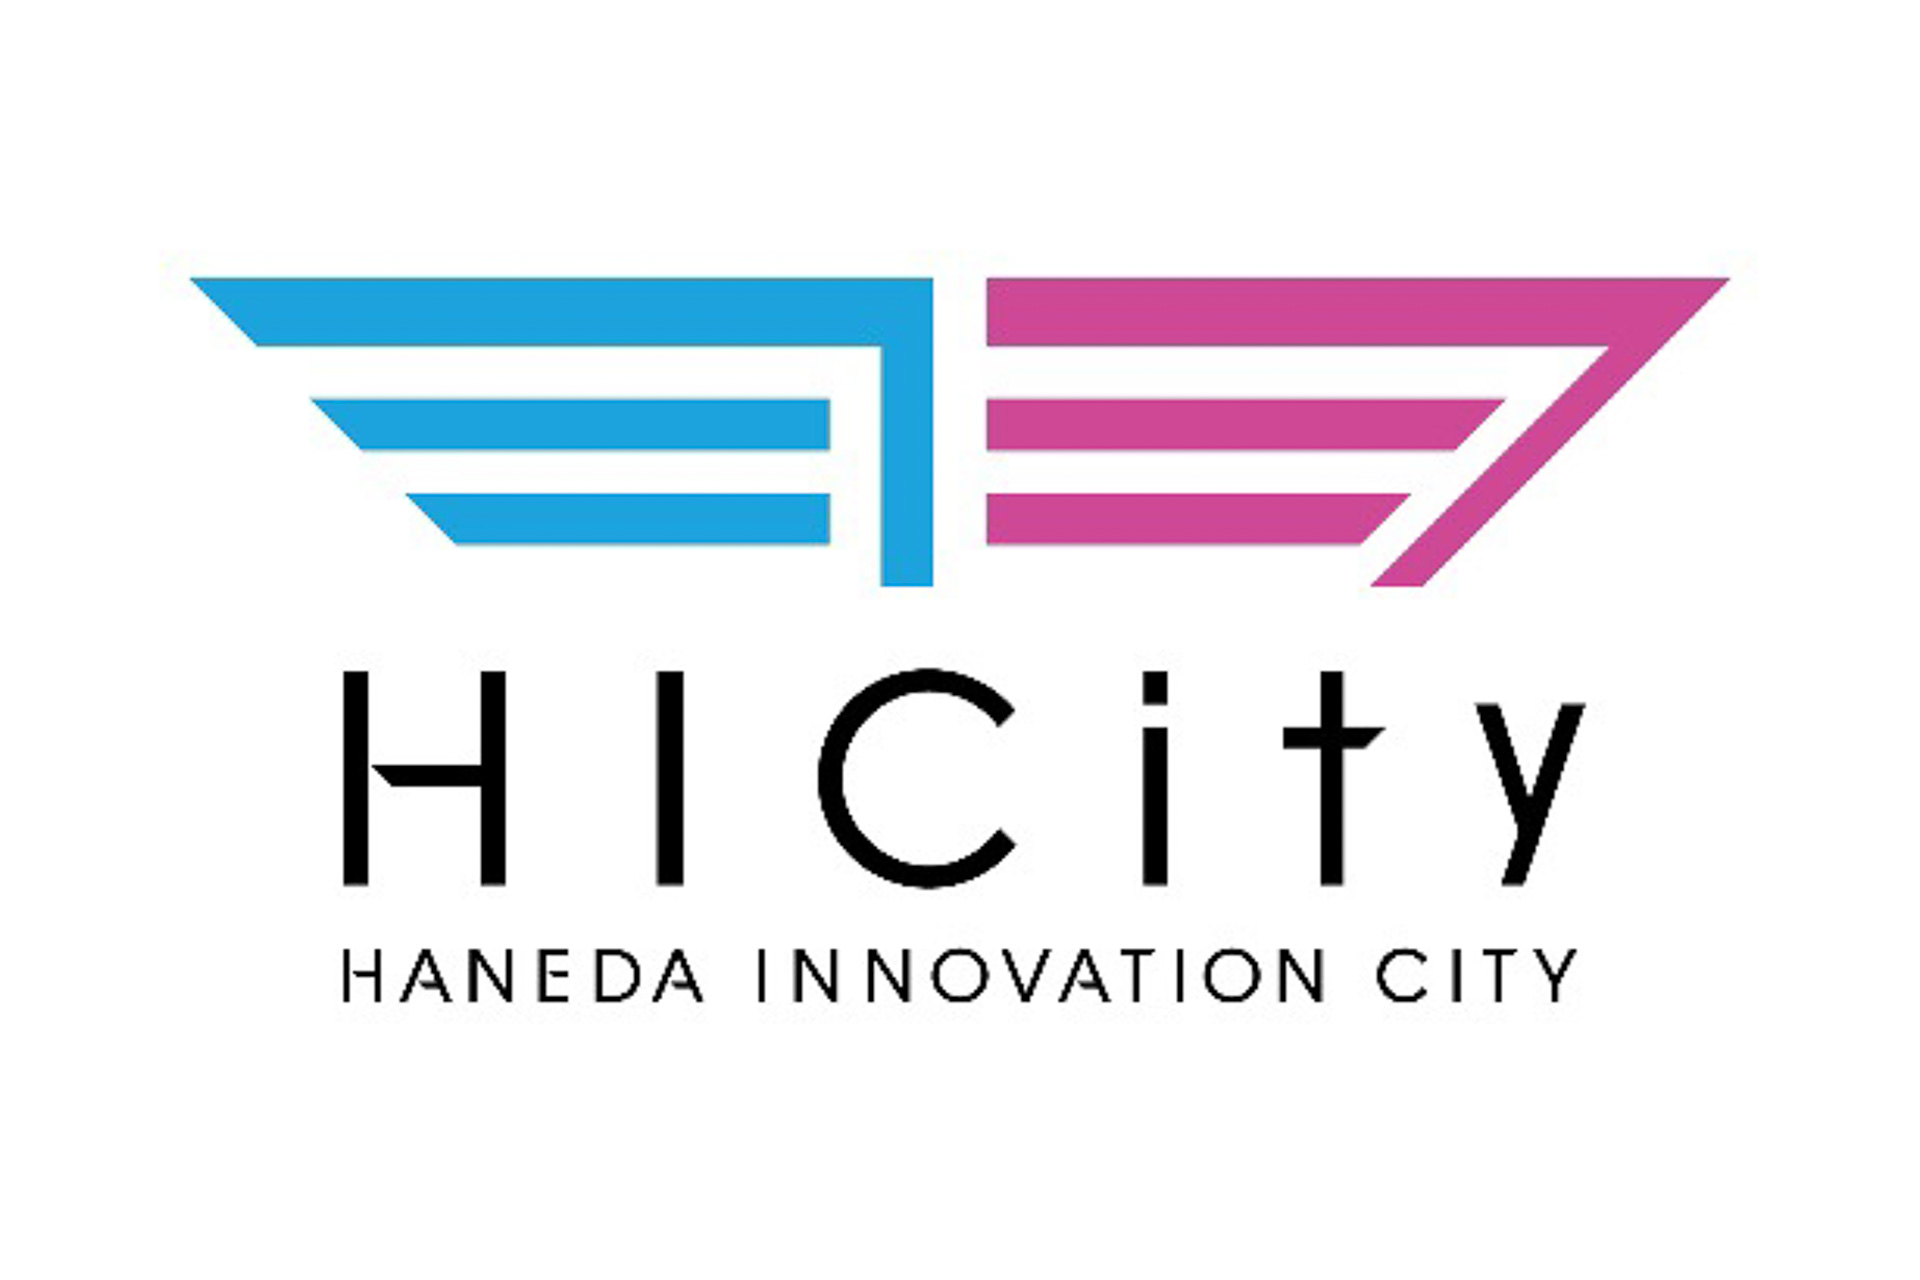 羽田空港跡地整備事業 施設名称は Haneda Innovation City 羽田